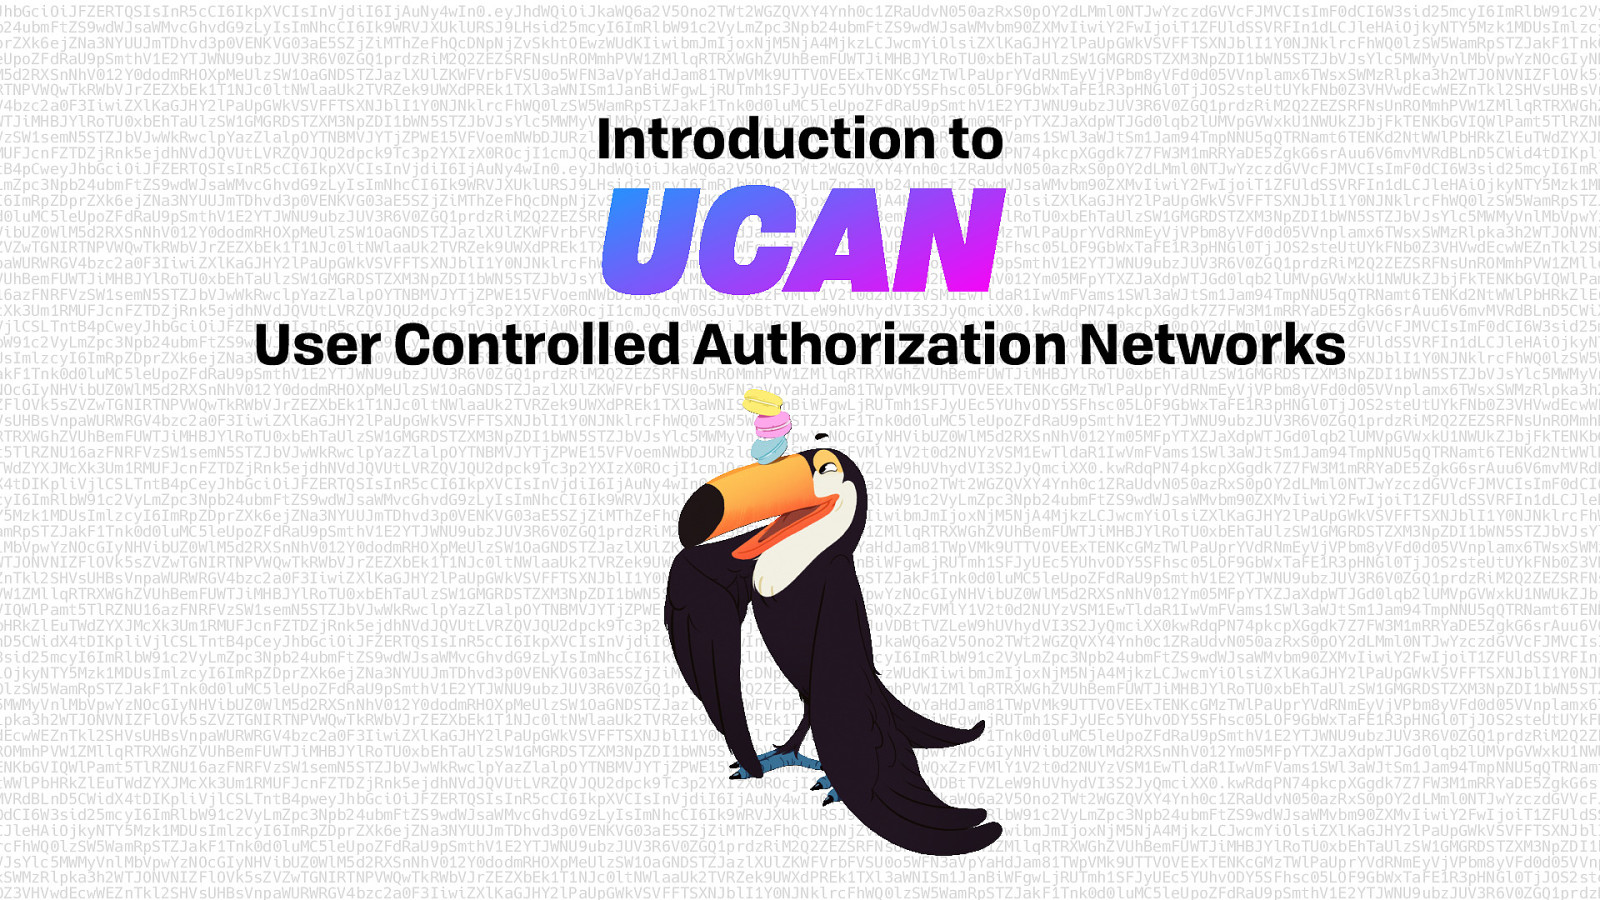 An Introduction to UCAN by Brooklyn Zelenka